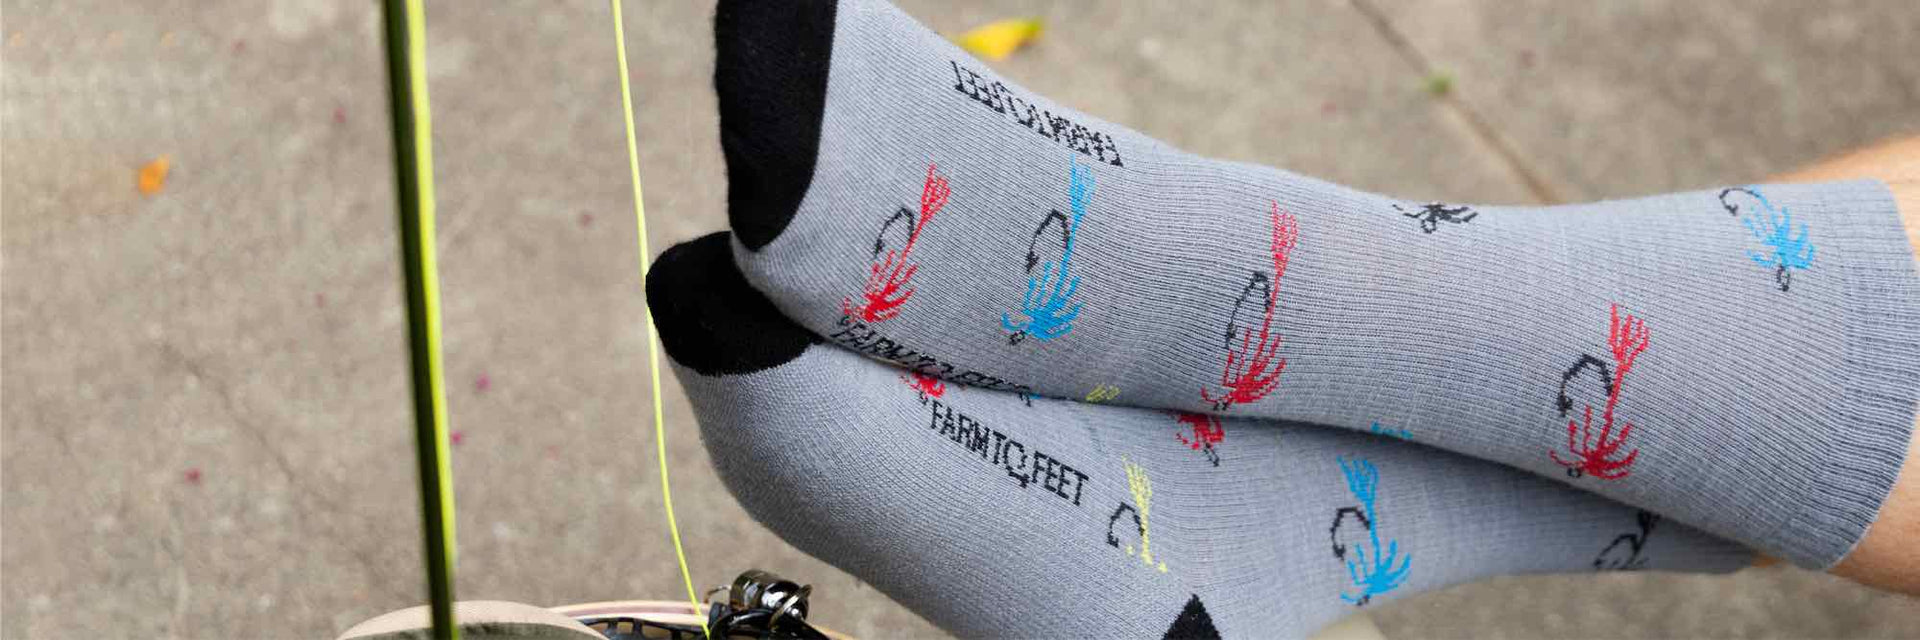 Men's Socks  Header Image Text Overlay